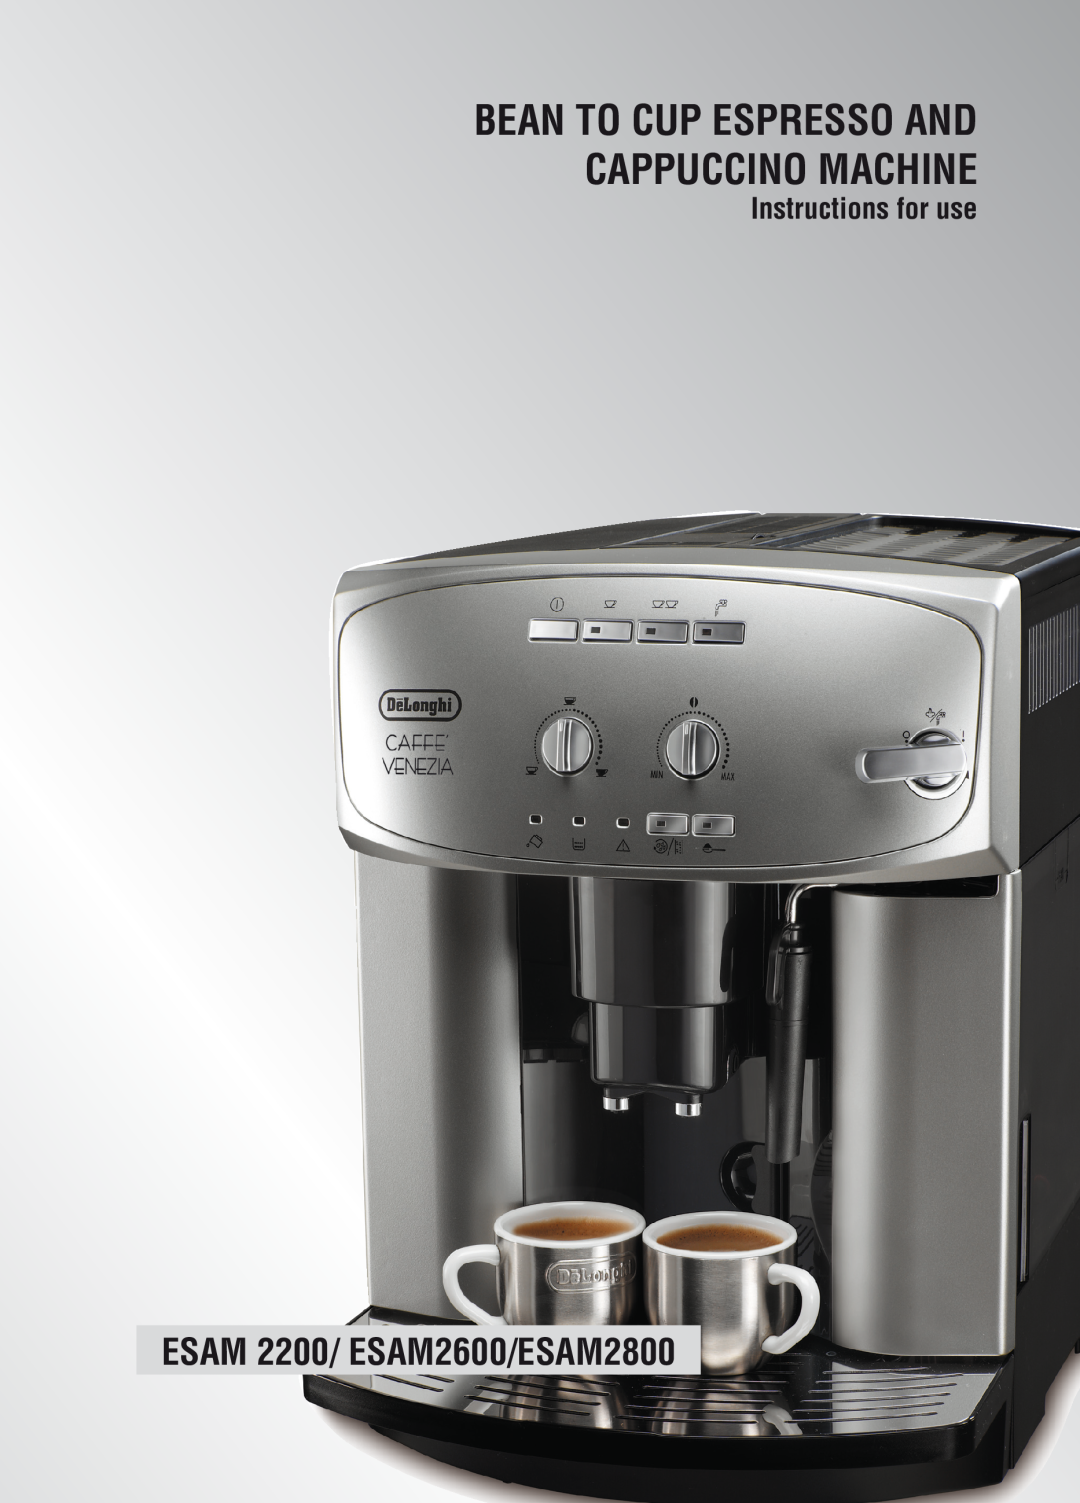 DeLonghi manual ESAM 2200/ ESAM2600/ESAM2800, Bean To Cup Espresso And De Cappuccino Machine, Instructions for use 